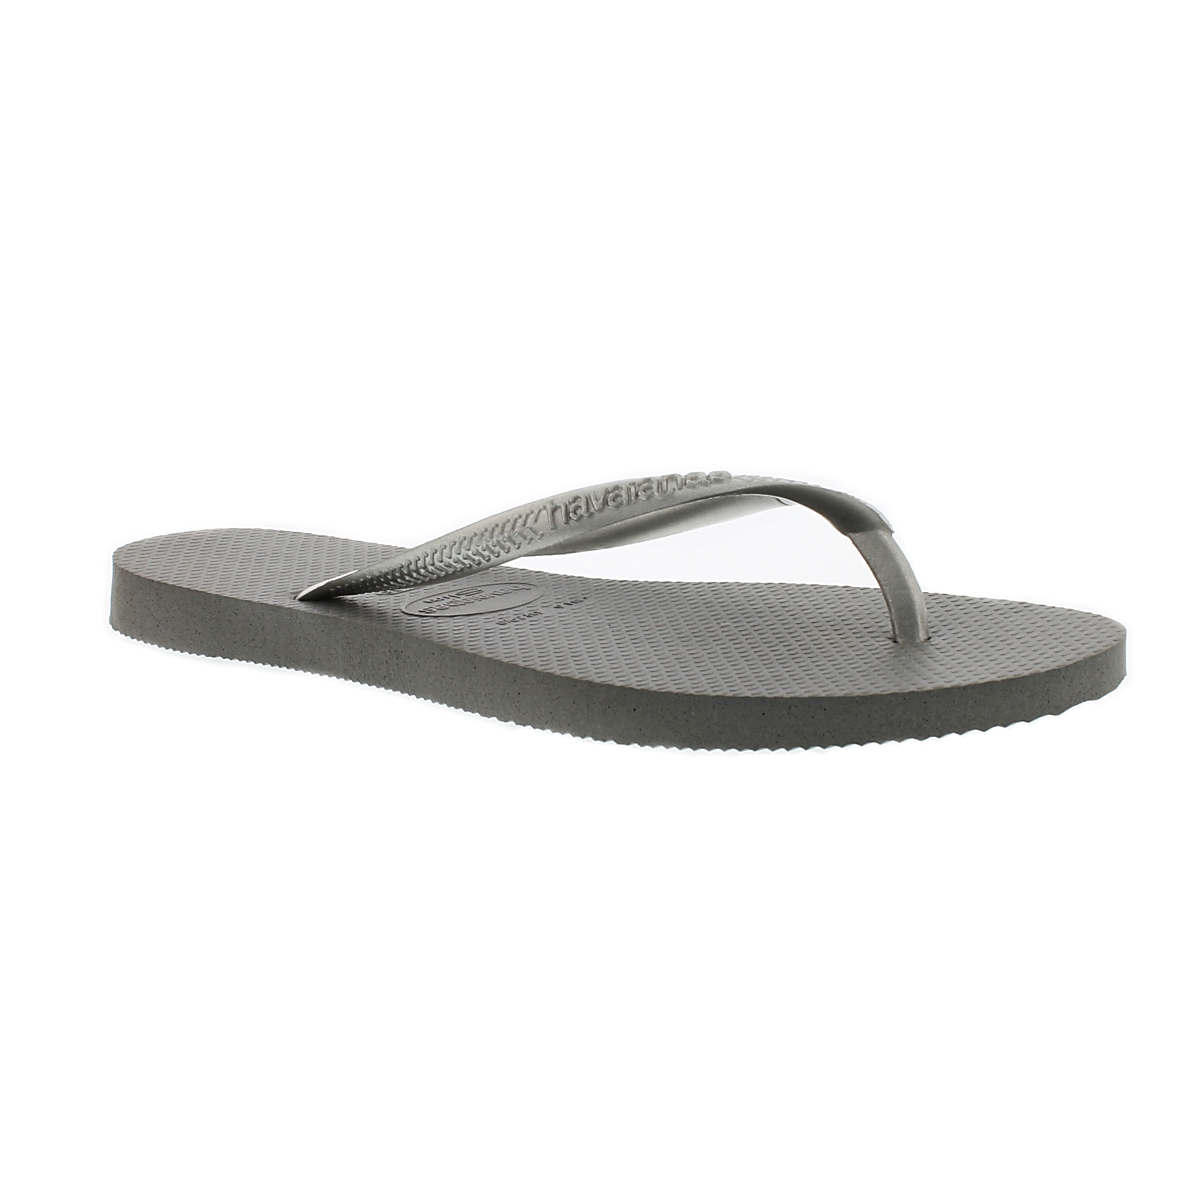 Havaianas Women's SLIM grey rubber flip flops SLIM1 GREY